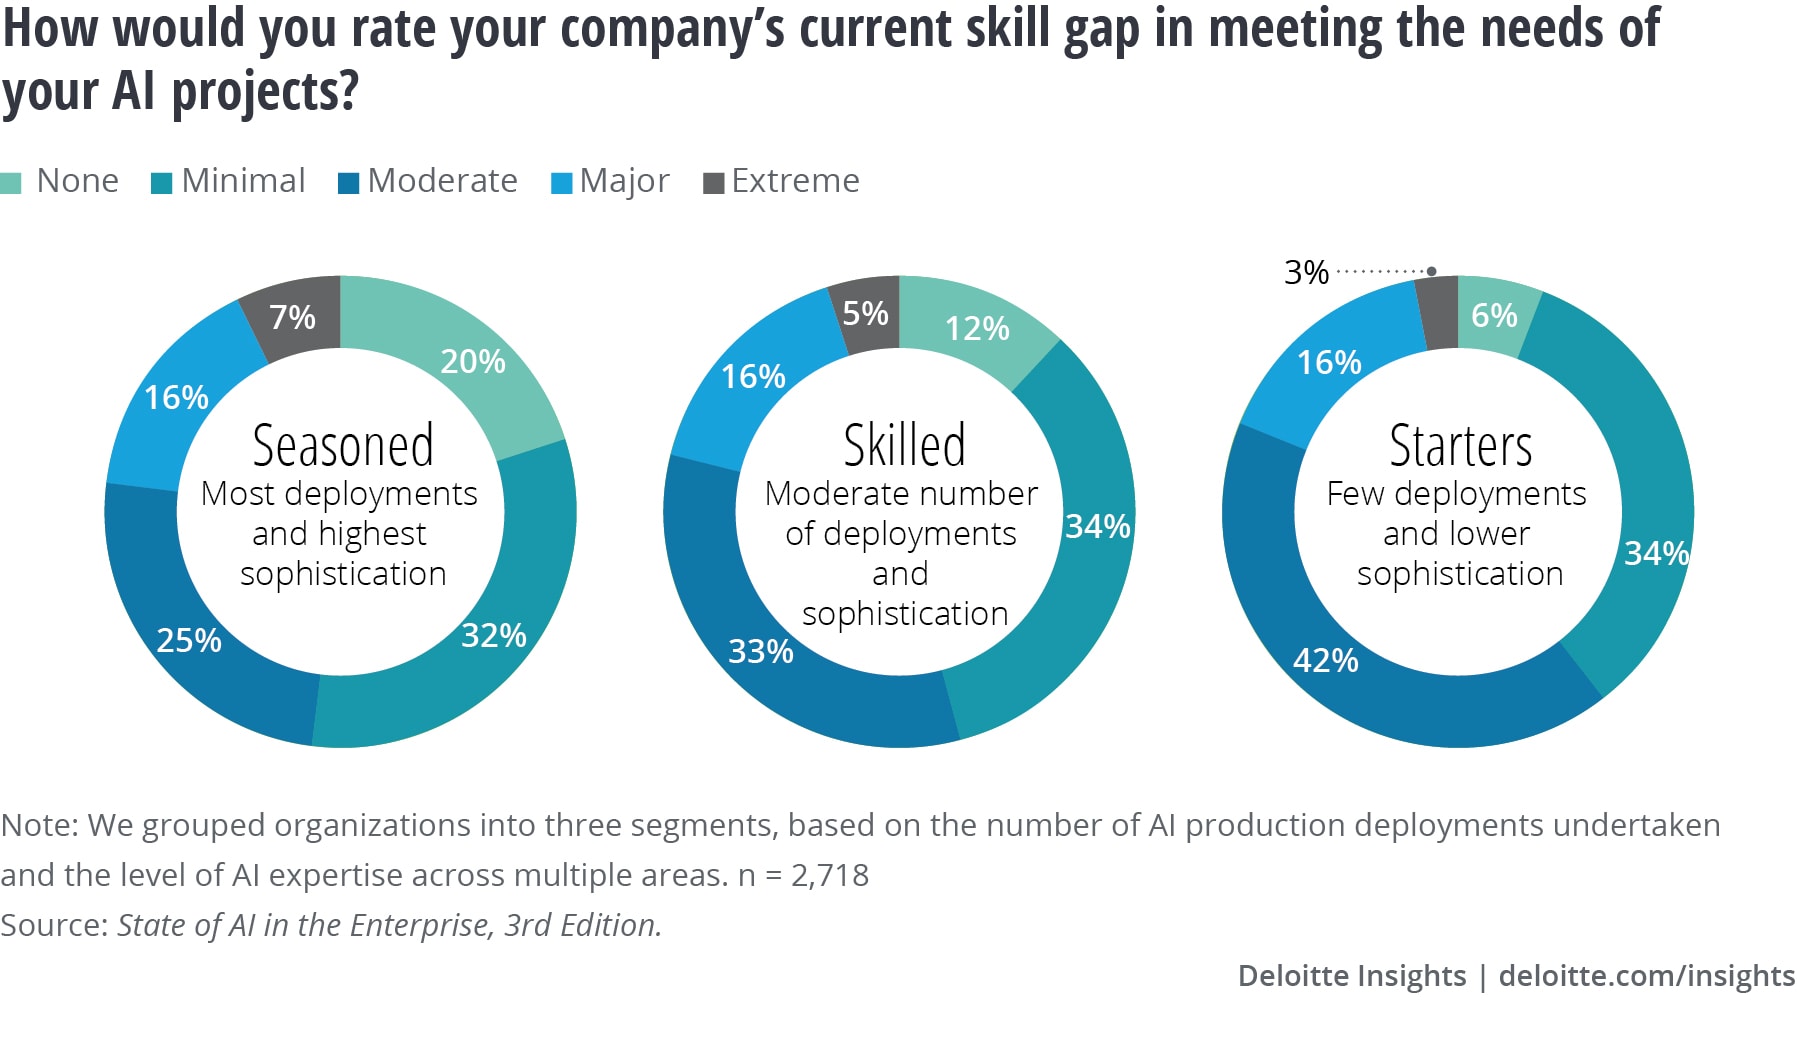 The AI skills gap